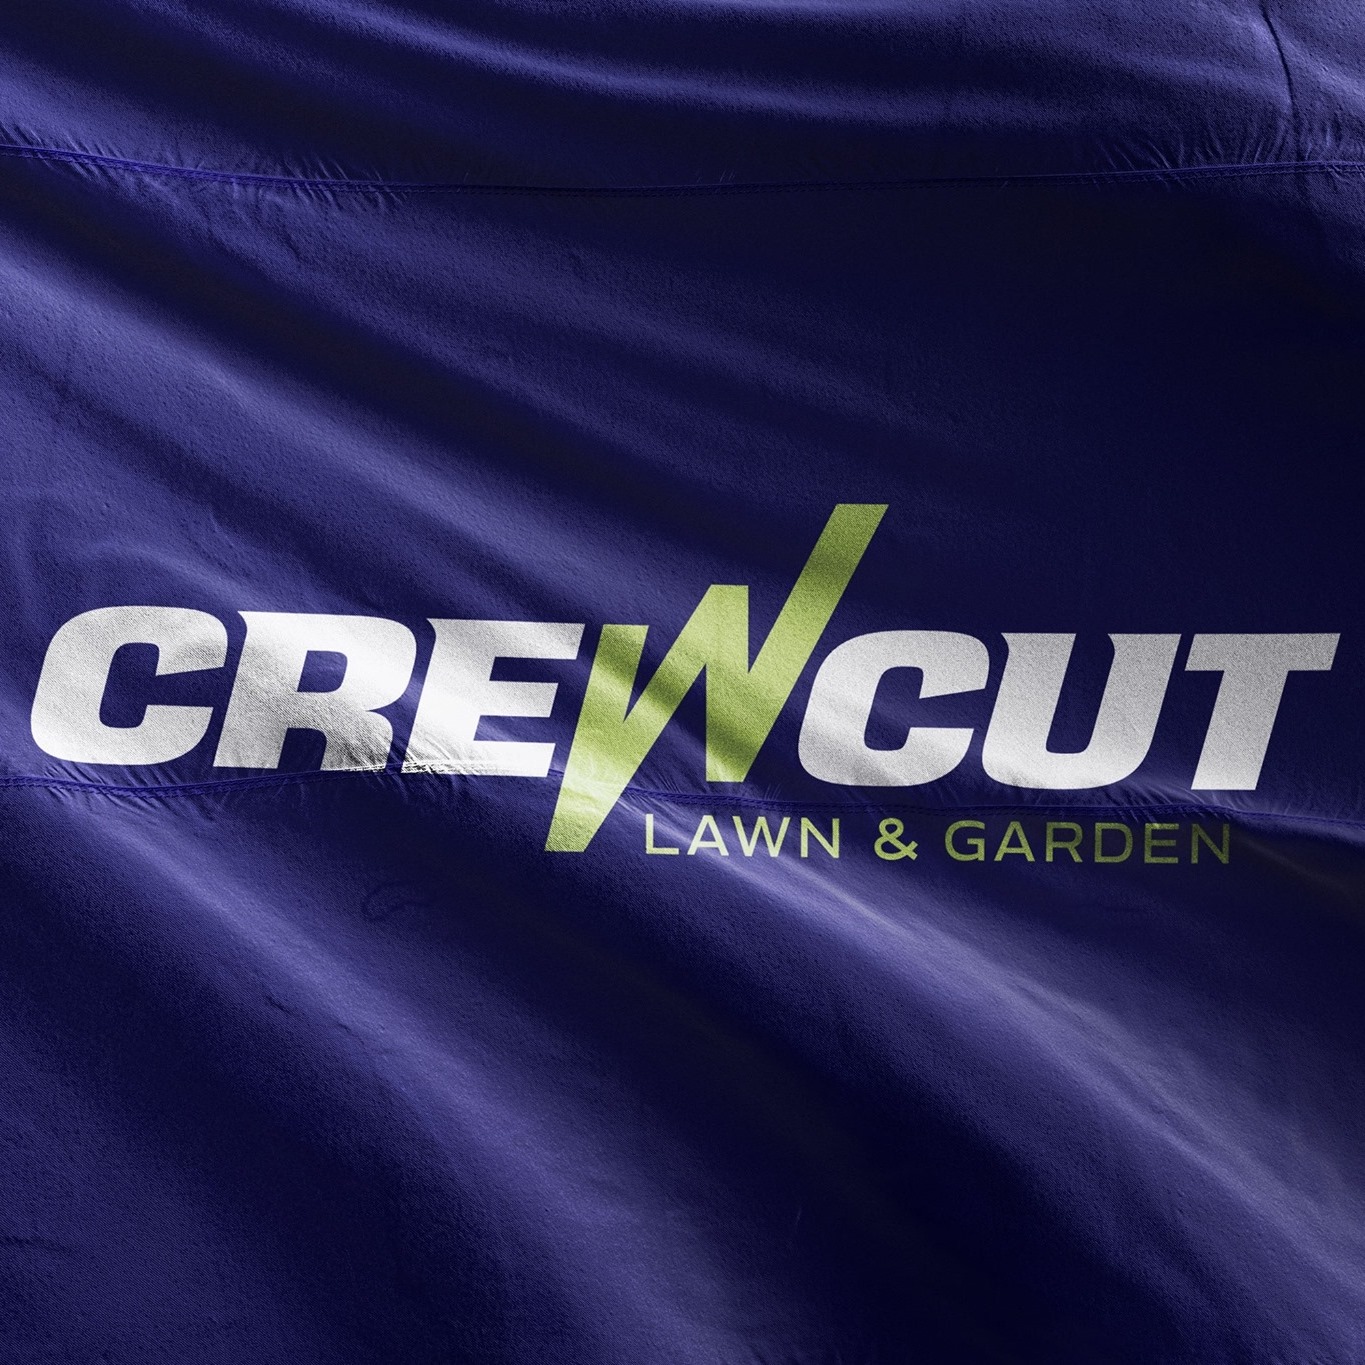 Crewcut Lawn and Garden